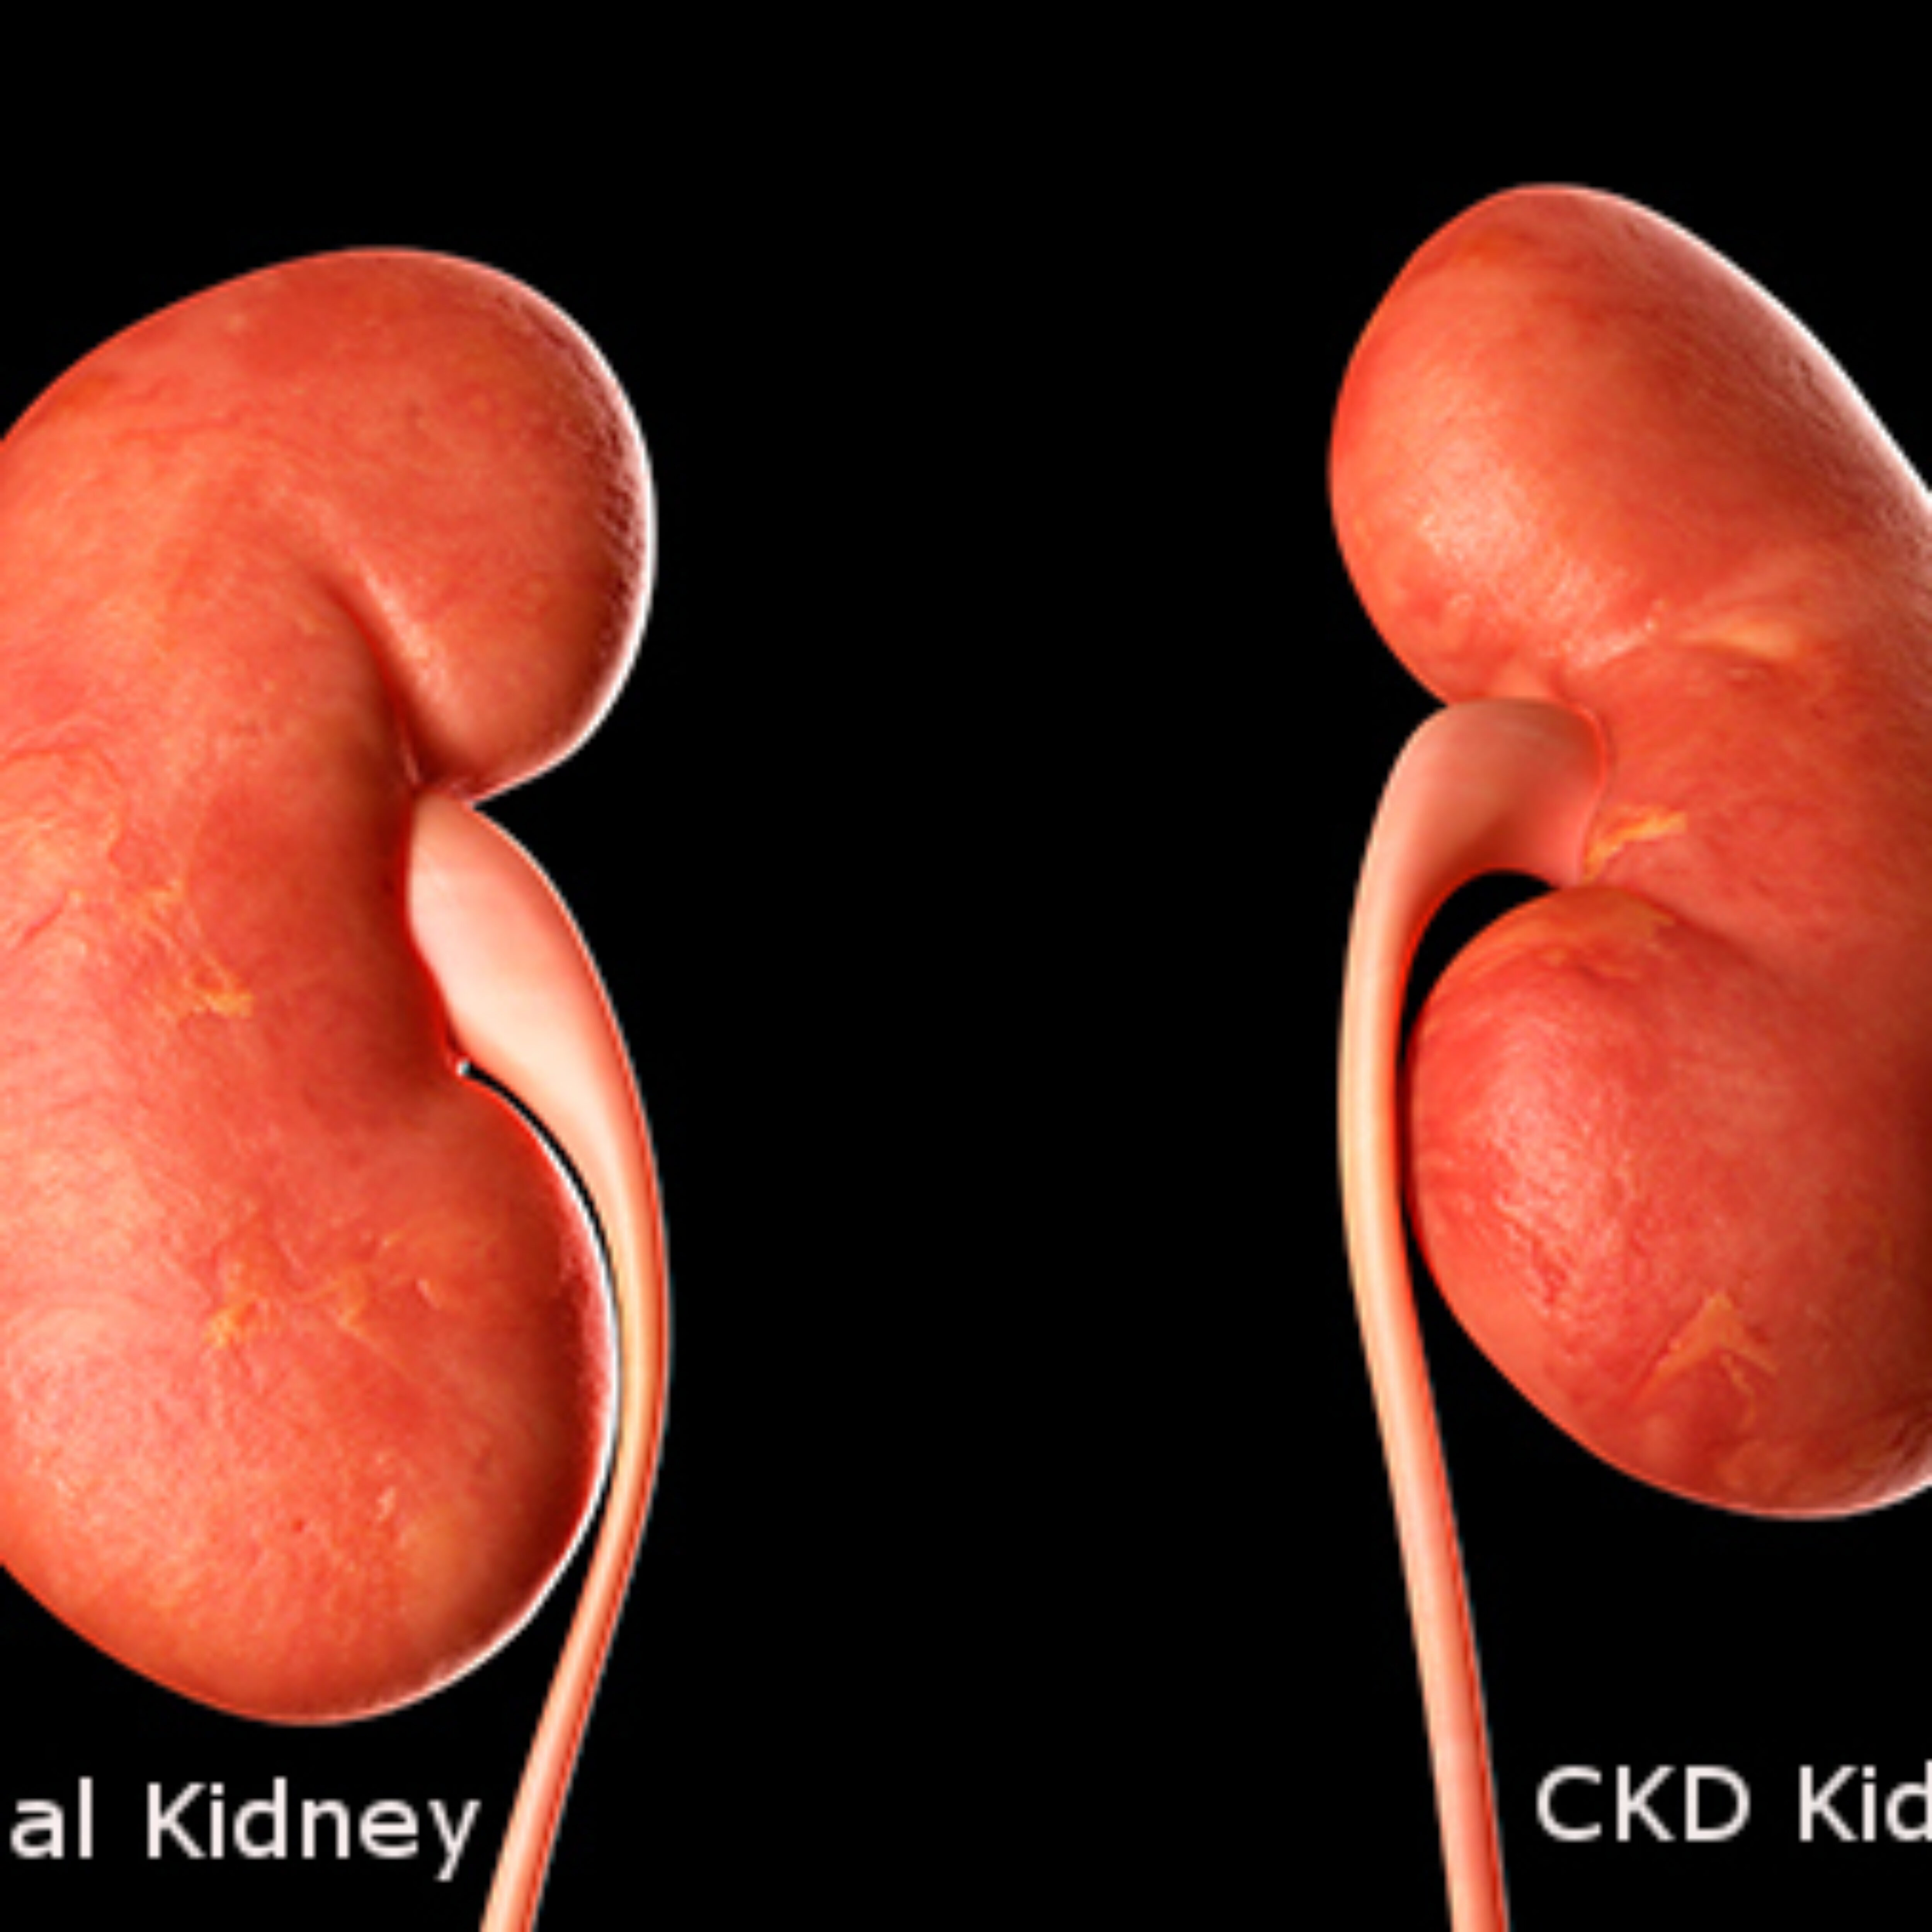 What is CKD or chronic kidney disease?